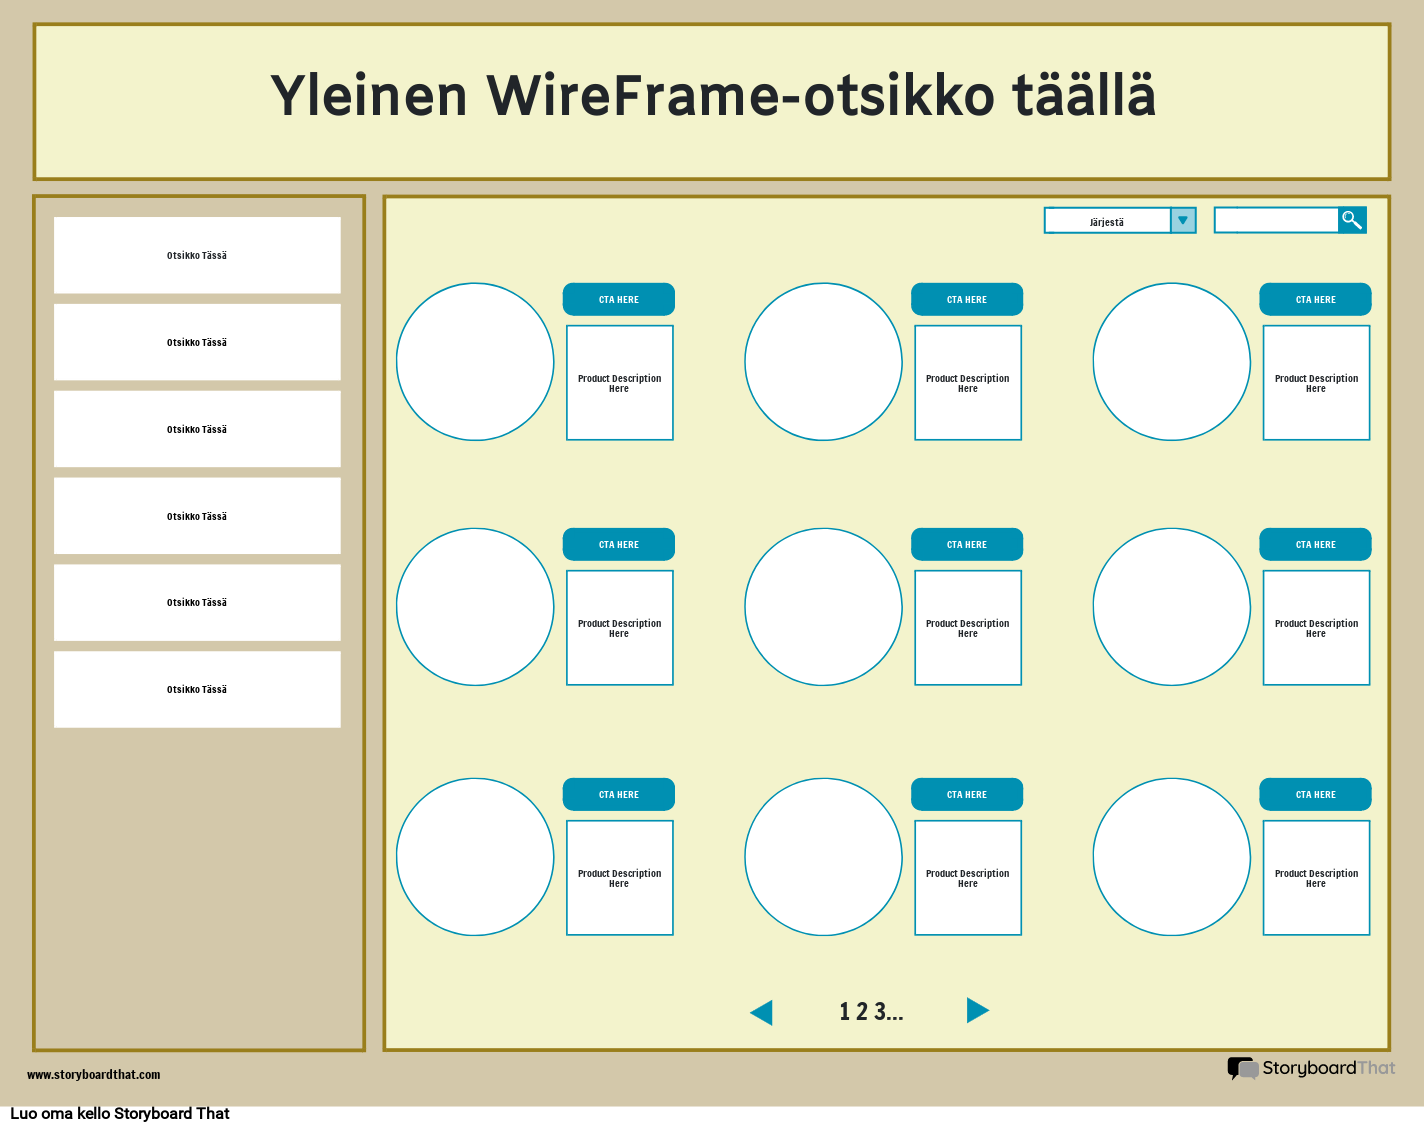 Yrityksen Yleinen WireFrame-malli 1